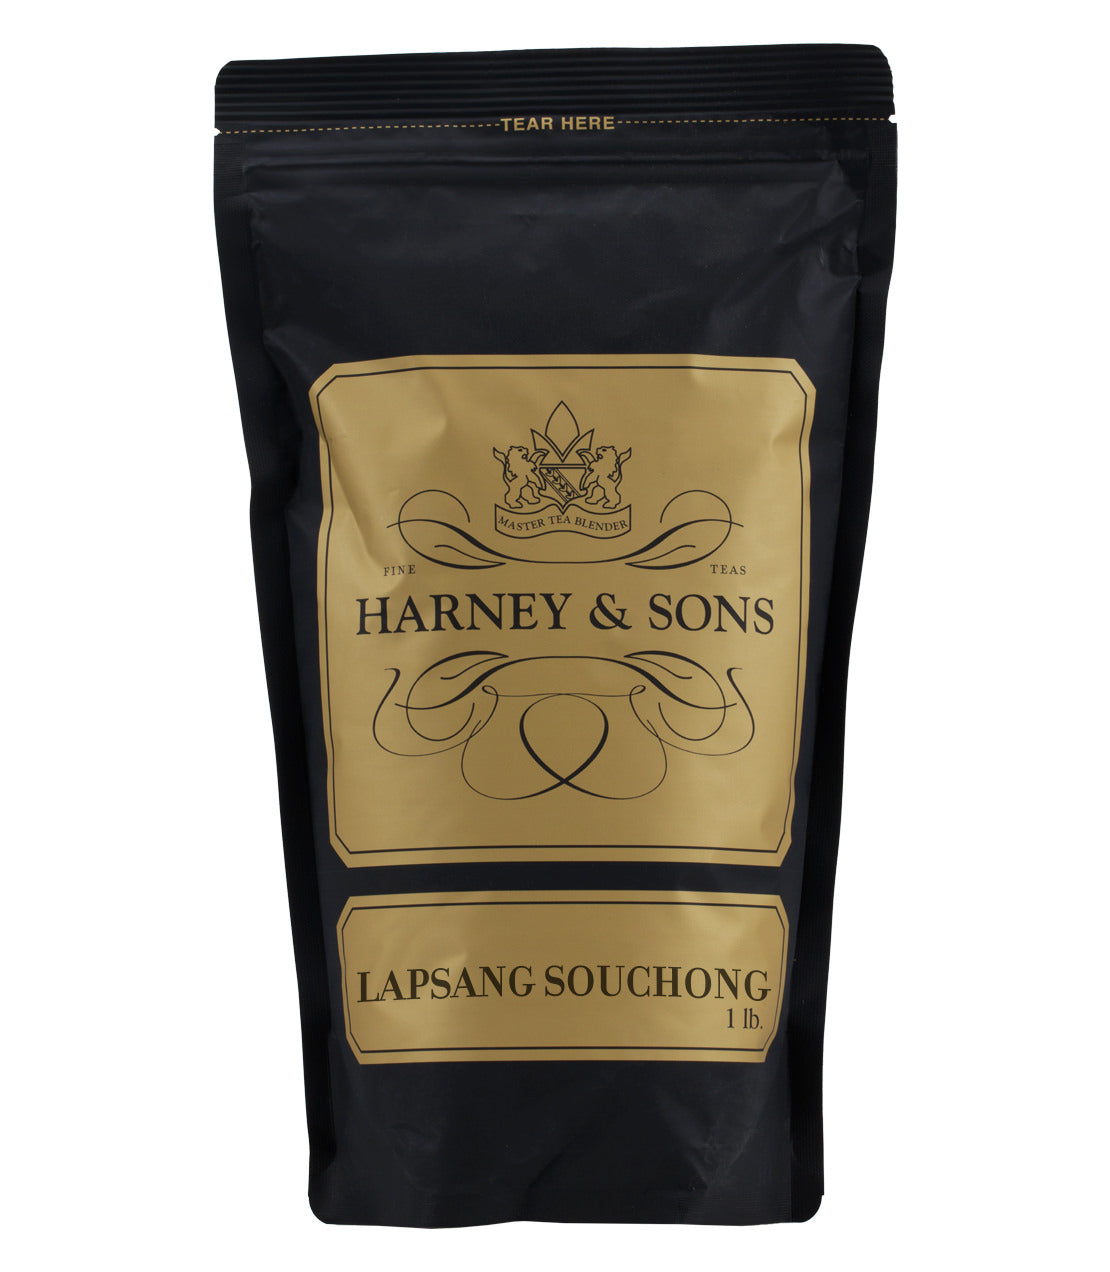 Lapsang Souchong - Loose 1 lb. Bag - Harney & Sons Fine Teas